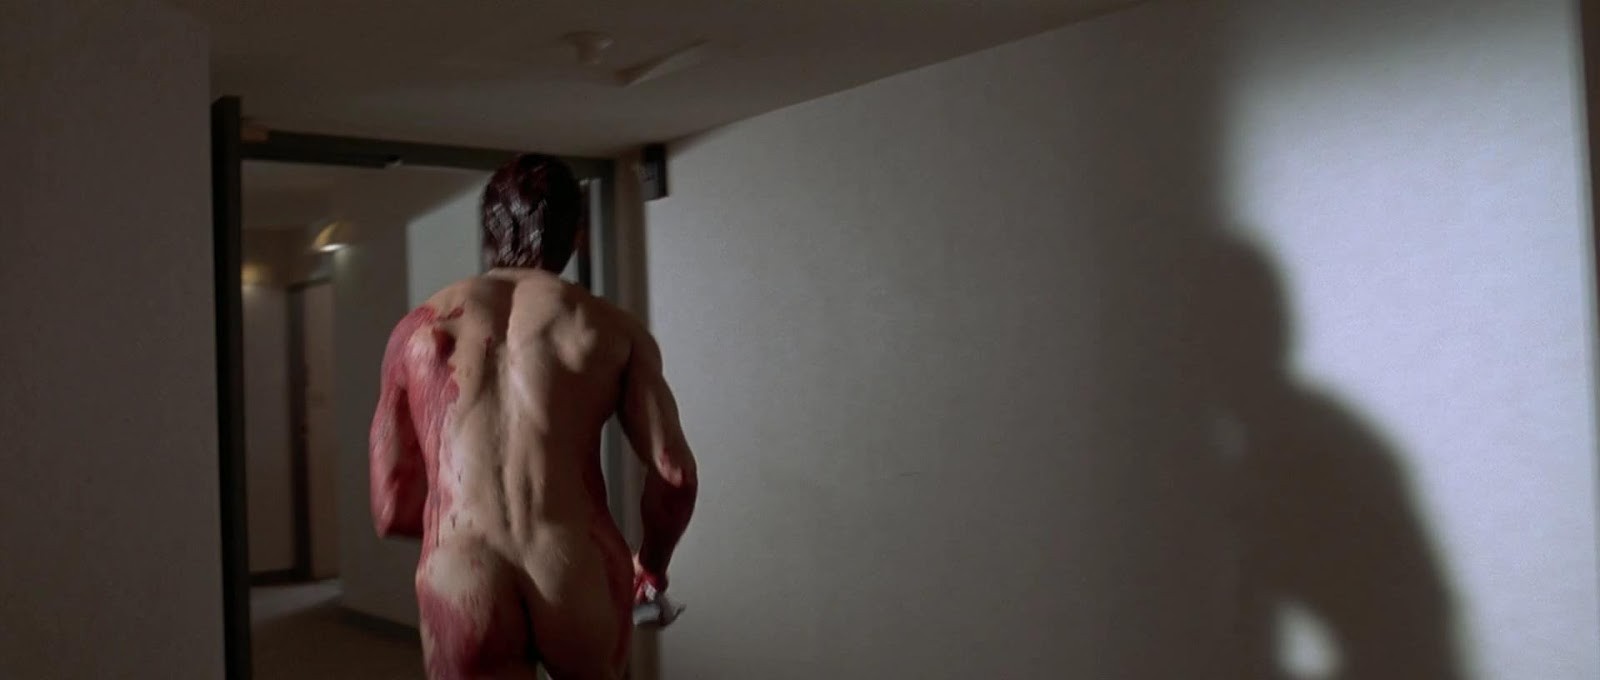 American psycho nude - 🧡 Cara Seymour nude in a bathtub collage from Ameri...